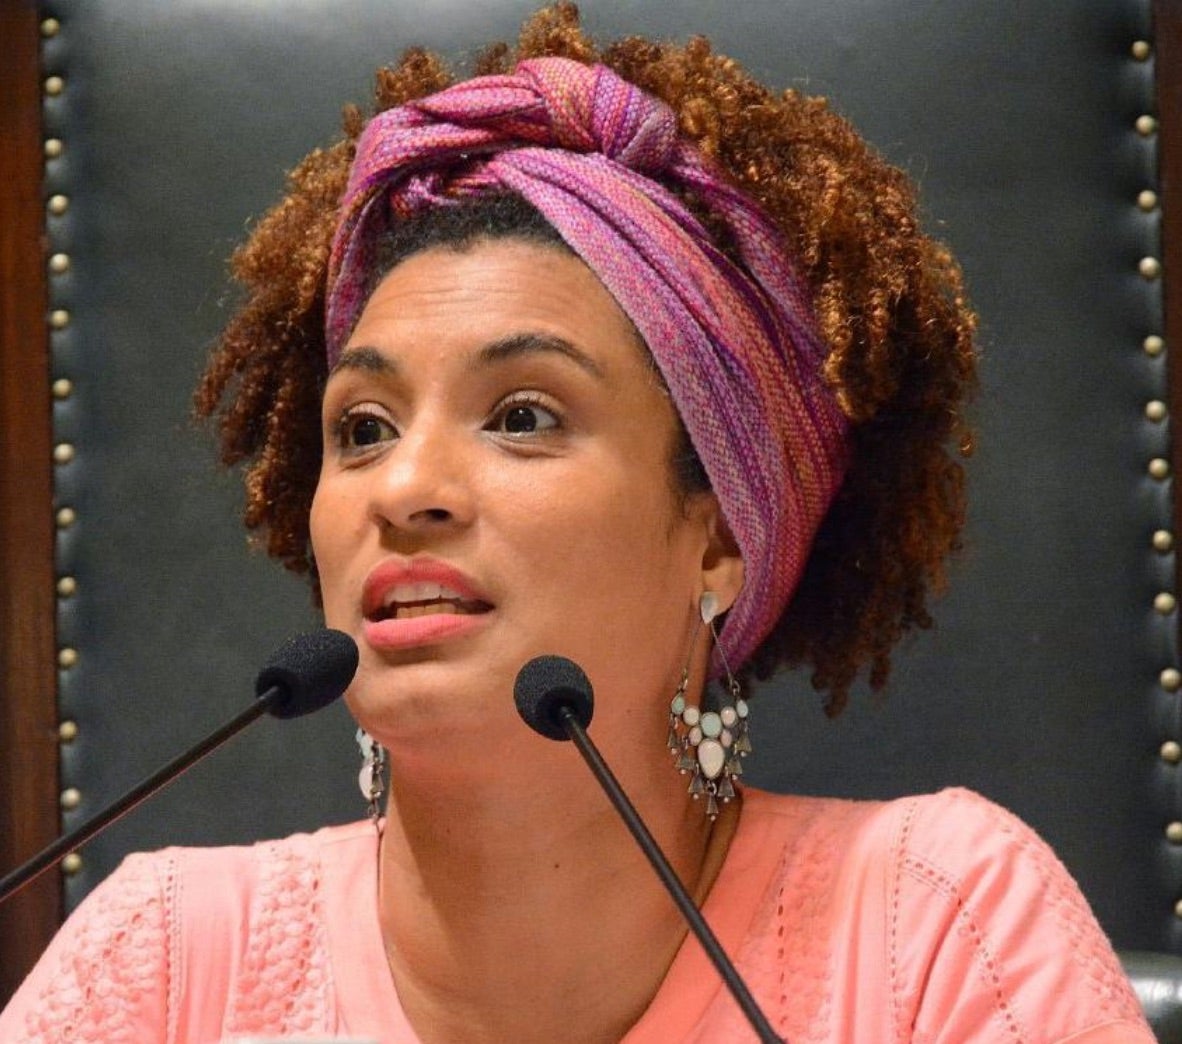 Marielle Franco, A Fearless Black Brazilian Politician And Anti-Police Violence Activist, Assassinated In Rio